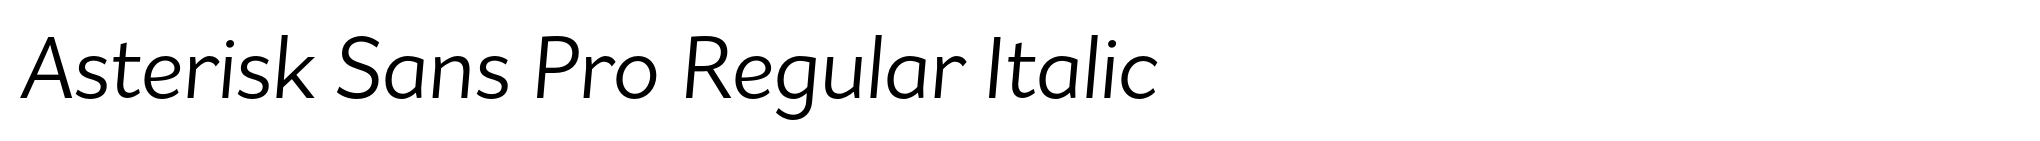 Asterisk Sans Pro Regular Italic image